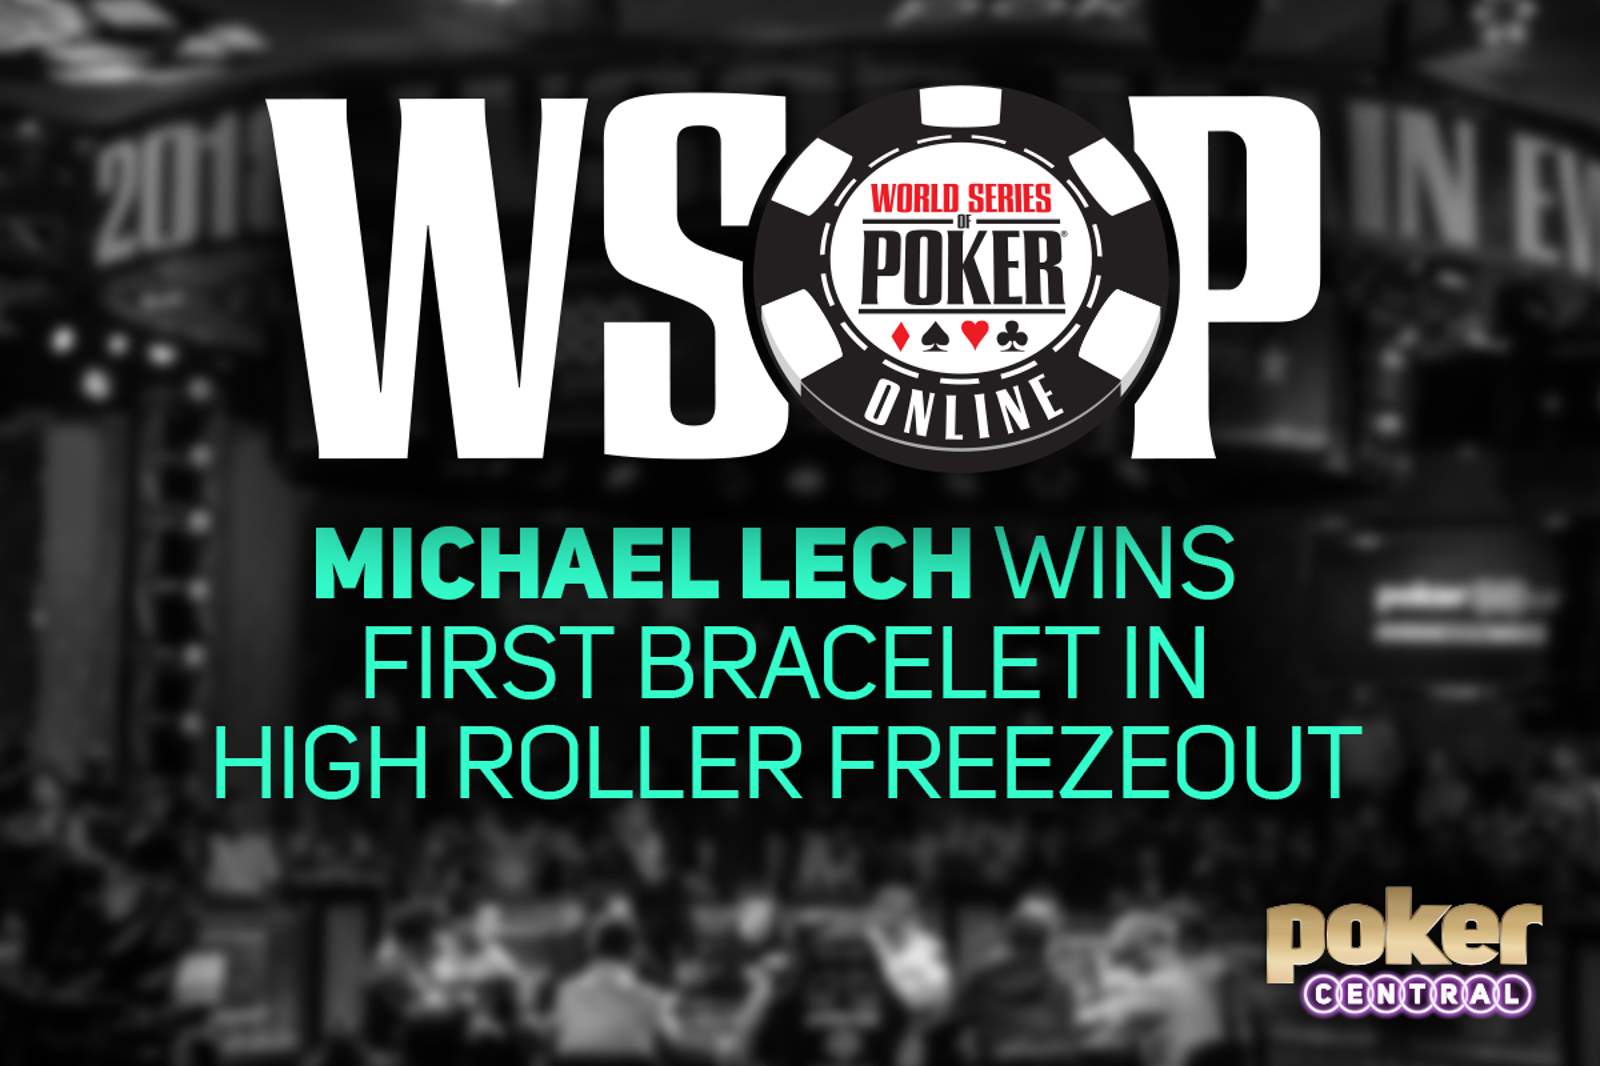 Michael Lech Wins WSOP Online High Roller Freezeout for $164,249